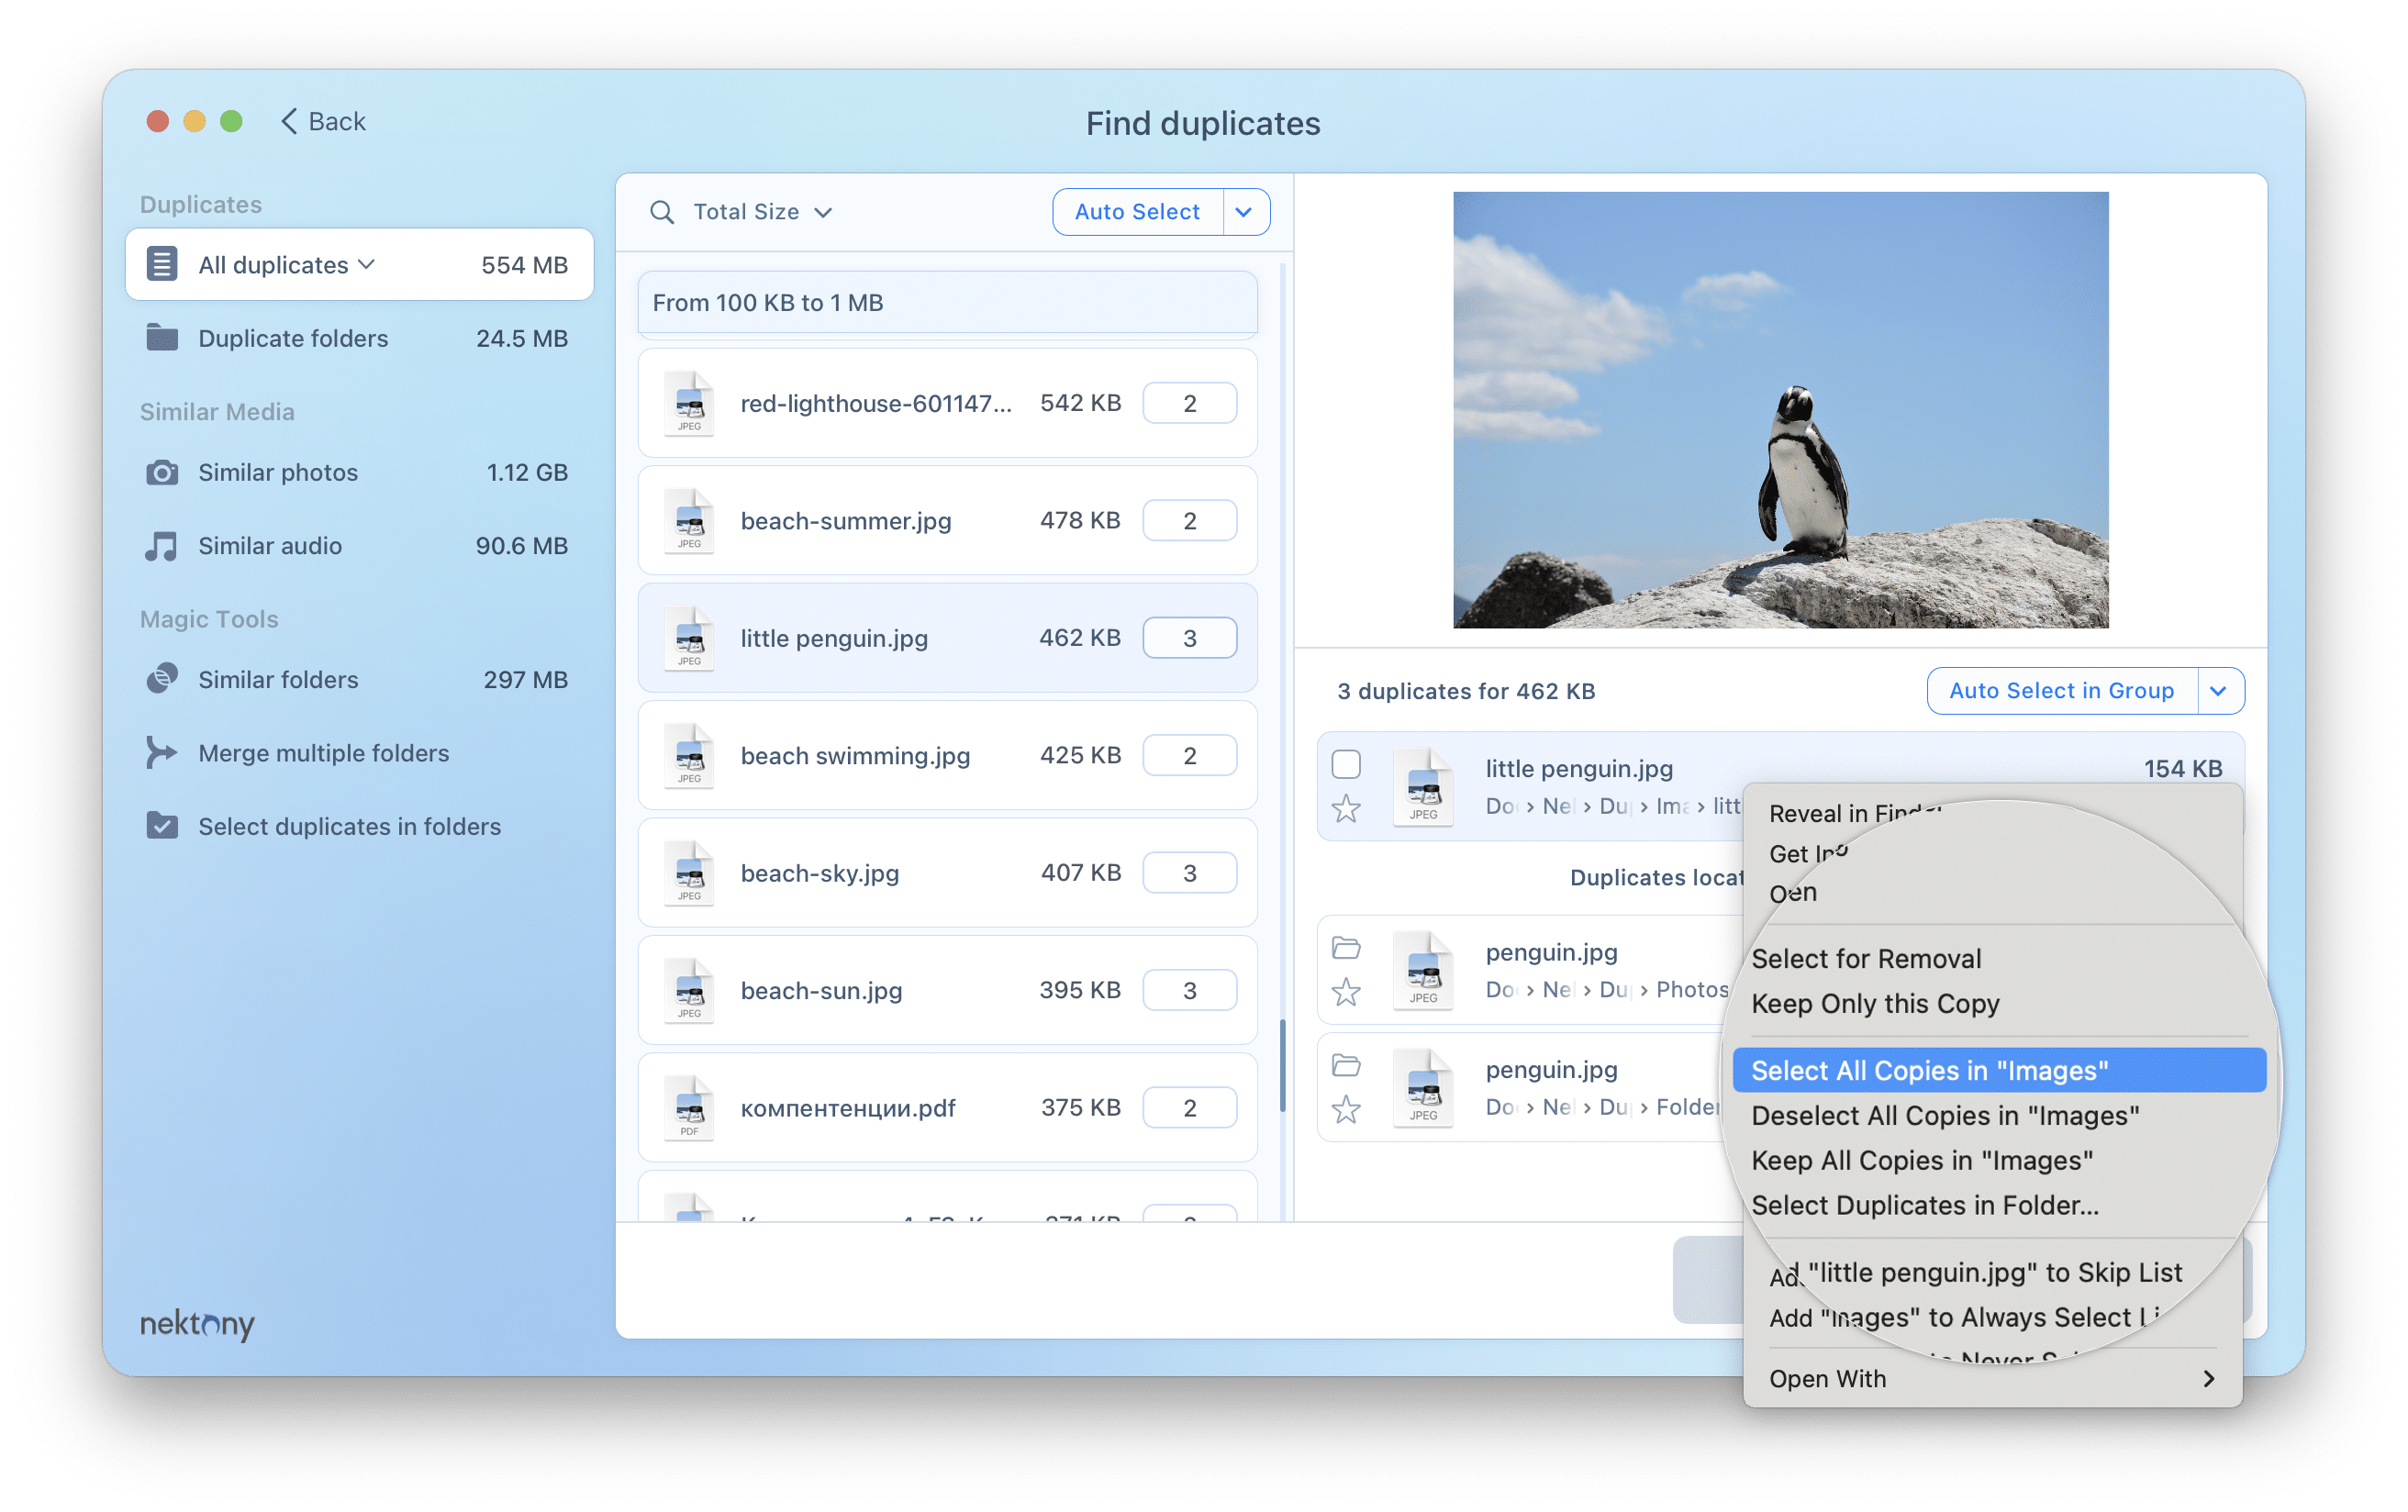 Contex menu showing the option to select duplicate copies